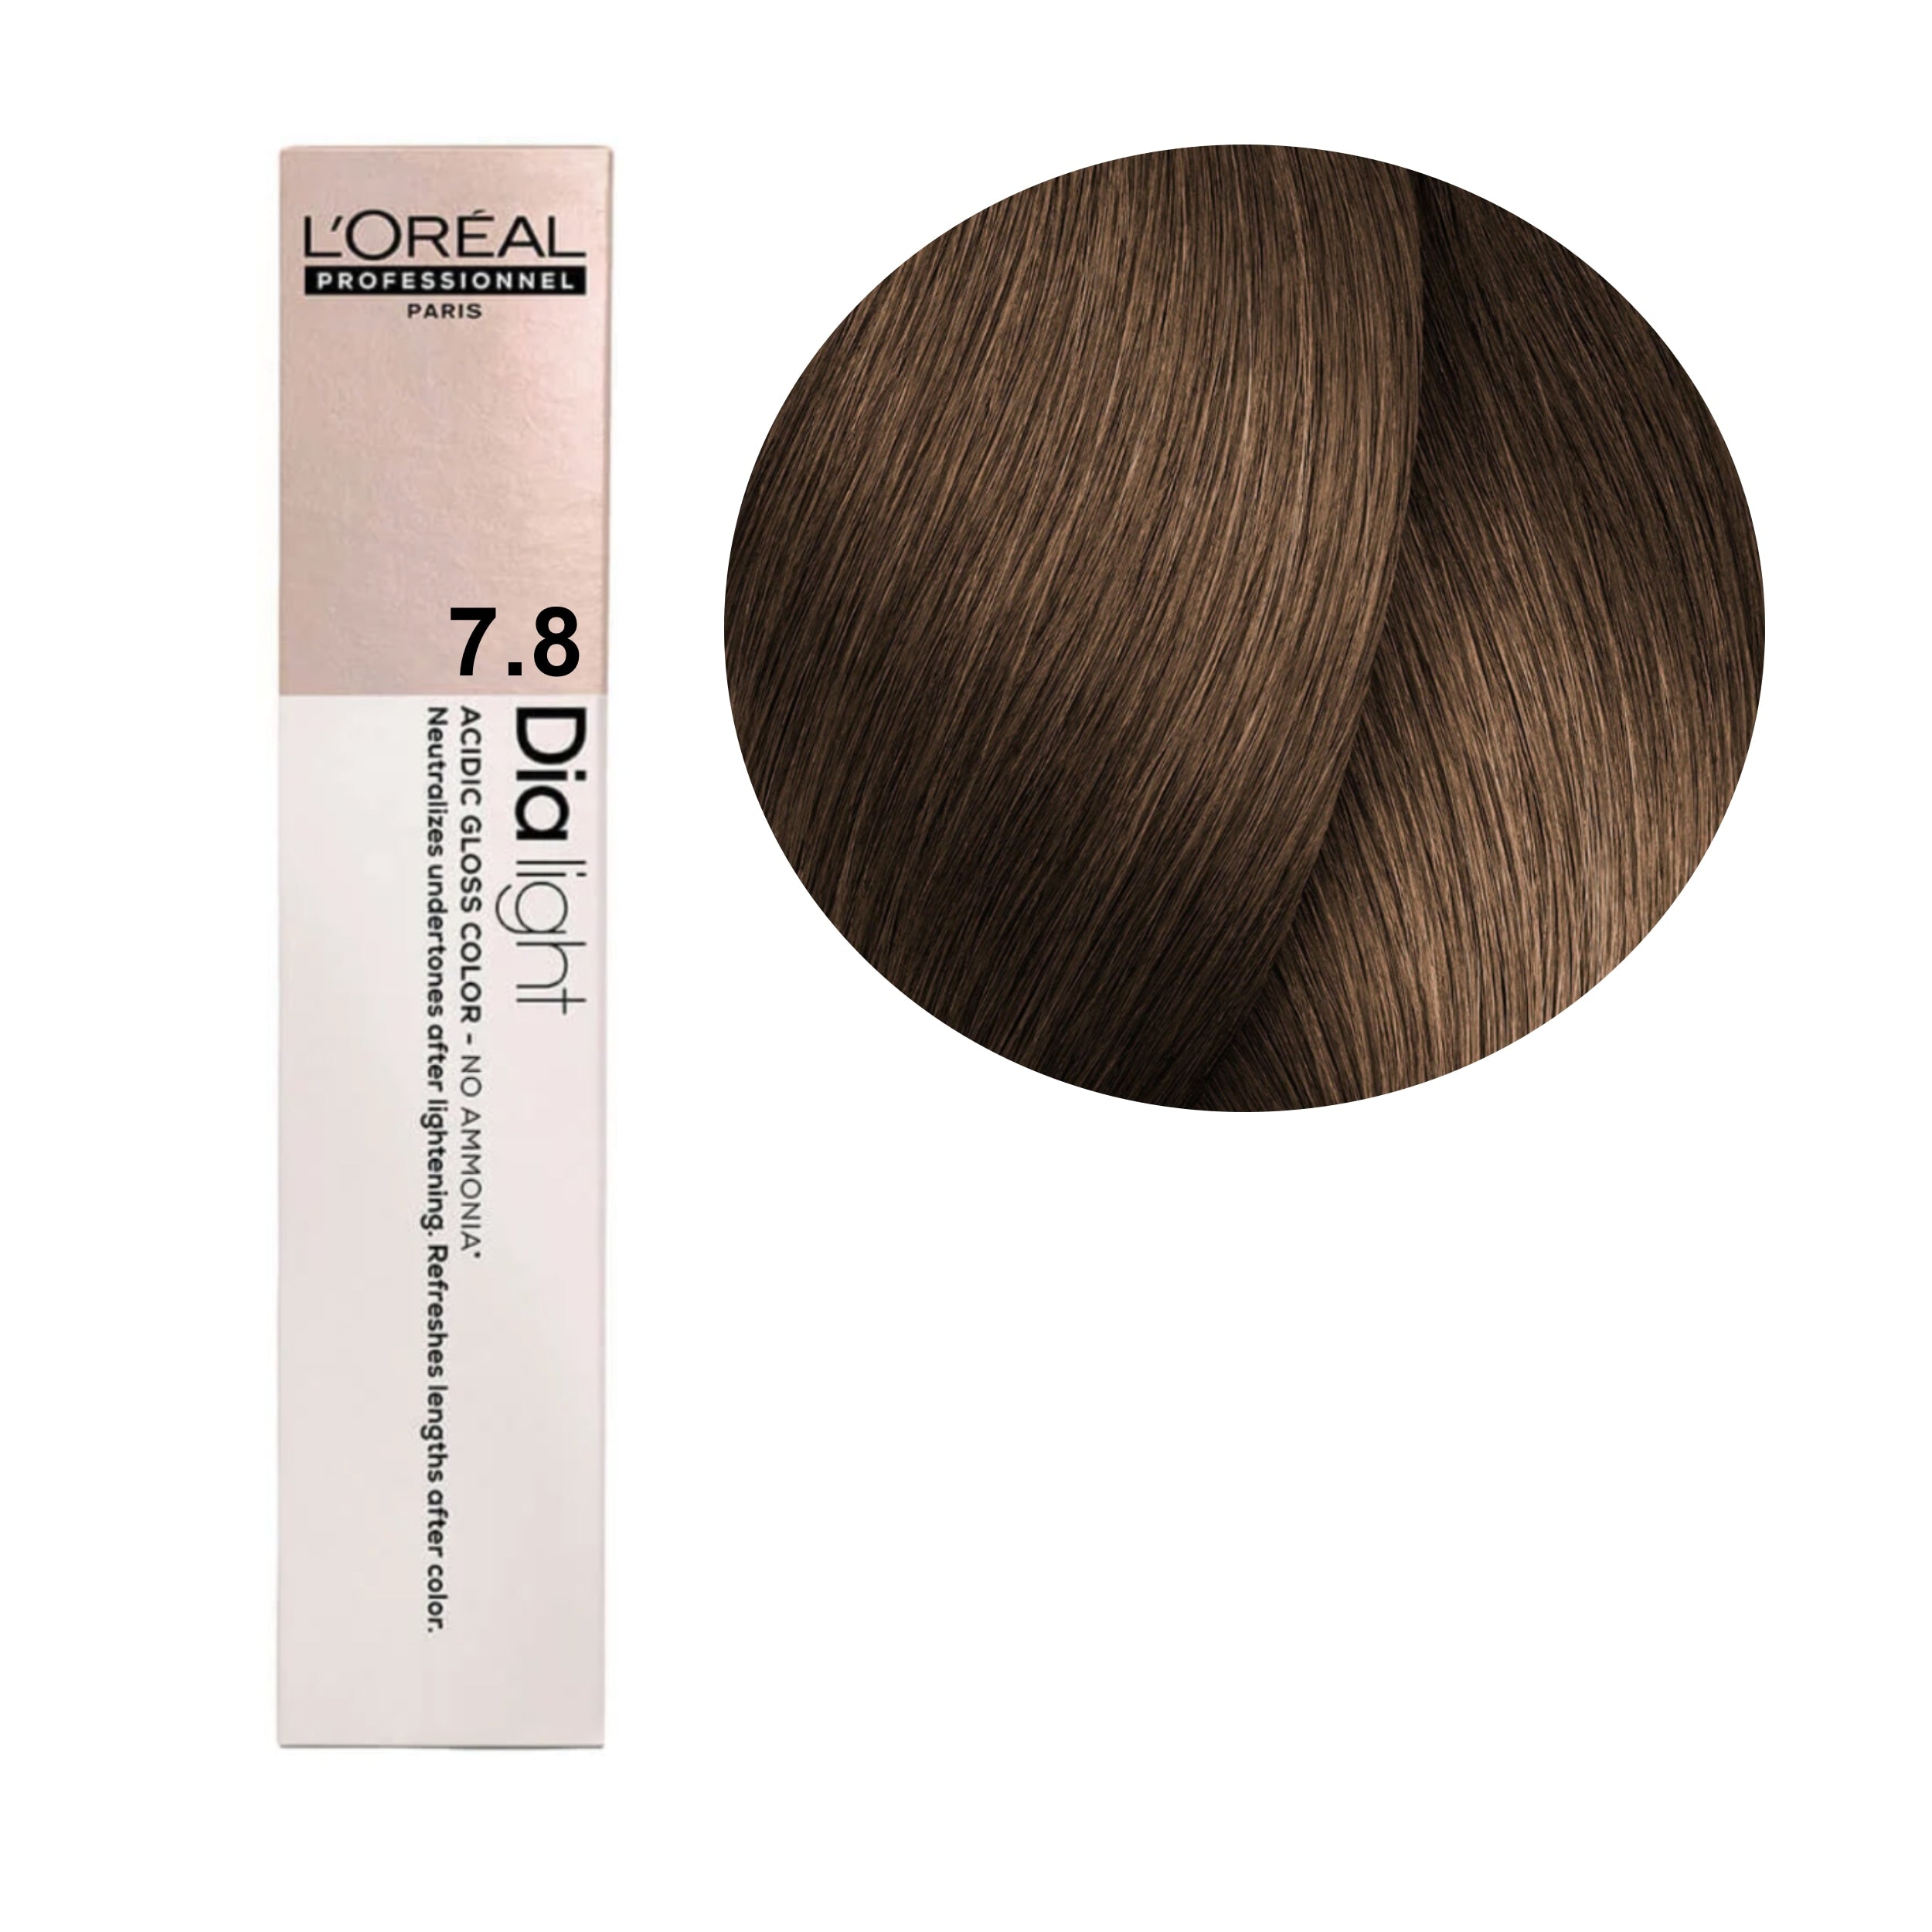 a box of loreal hair color in dark brown